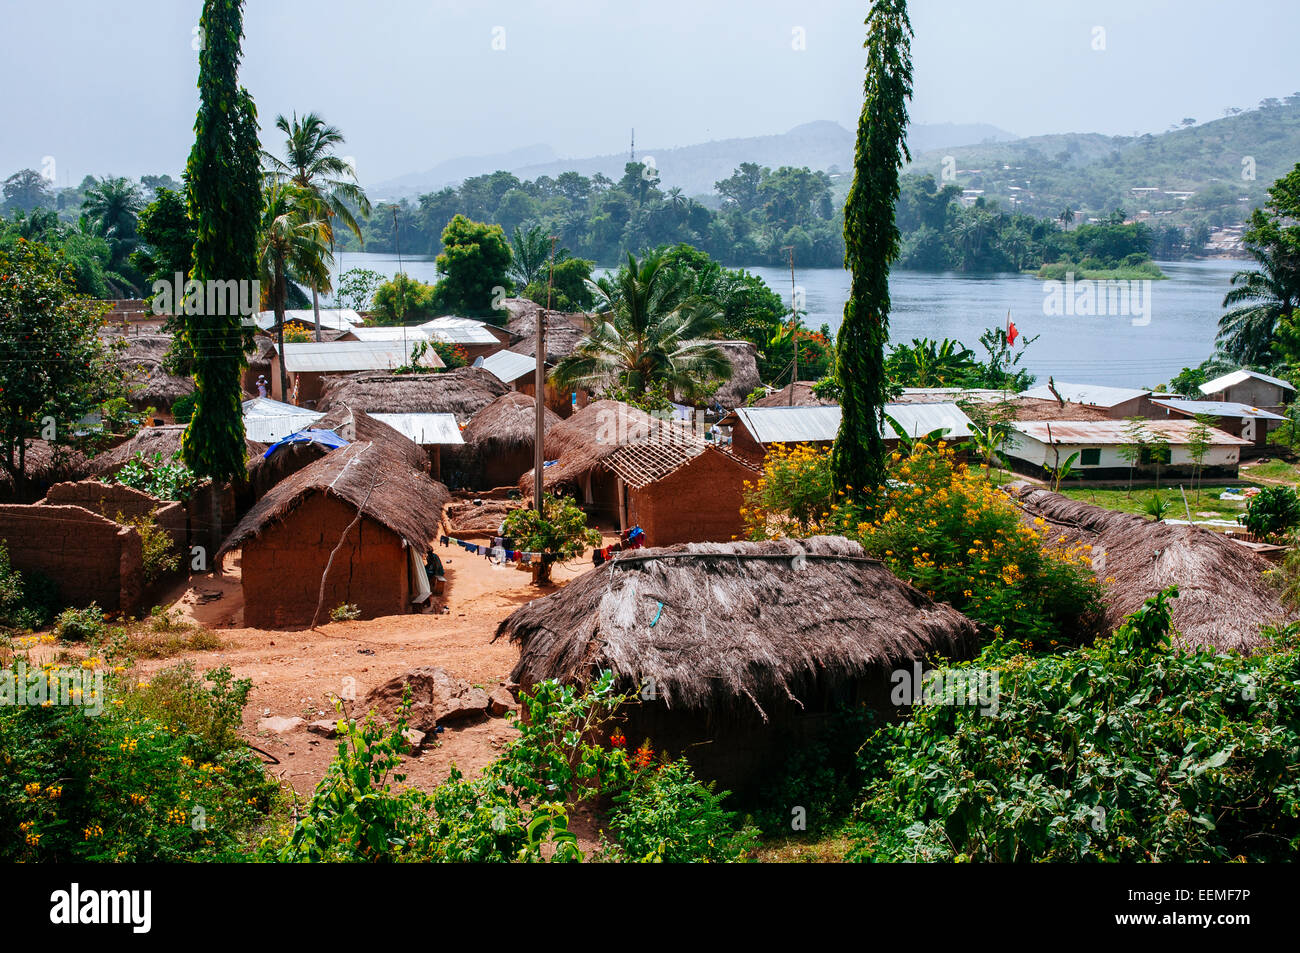 Village in Volta region, Ghana. Stock Photo